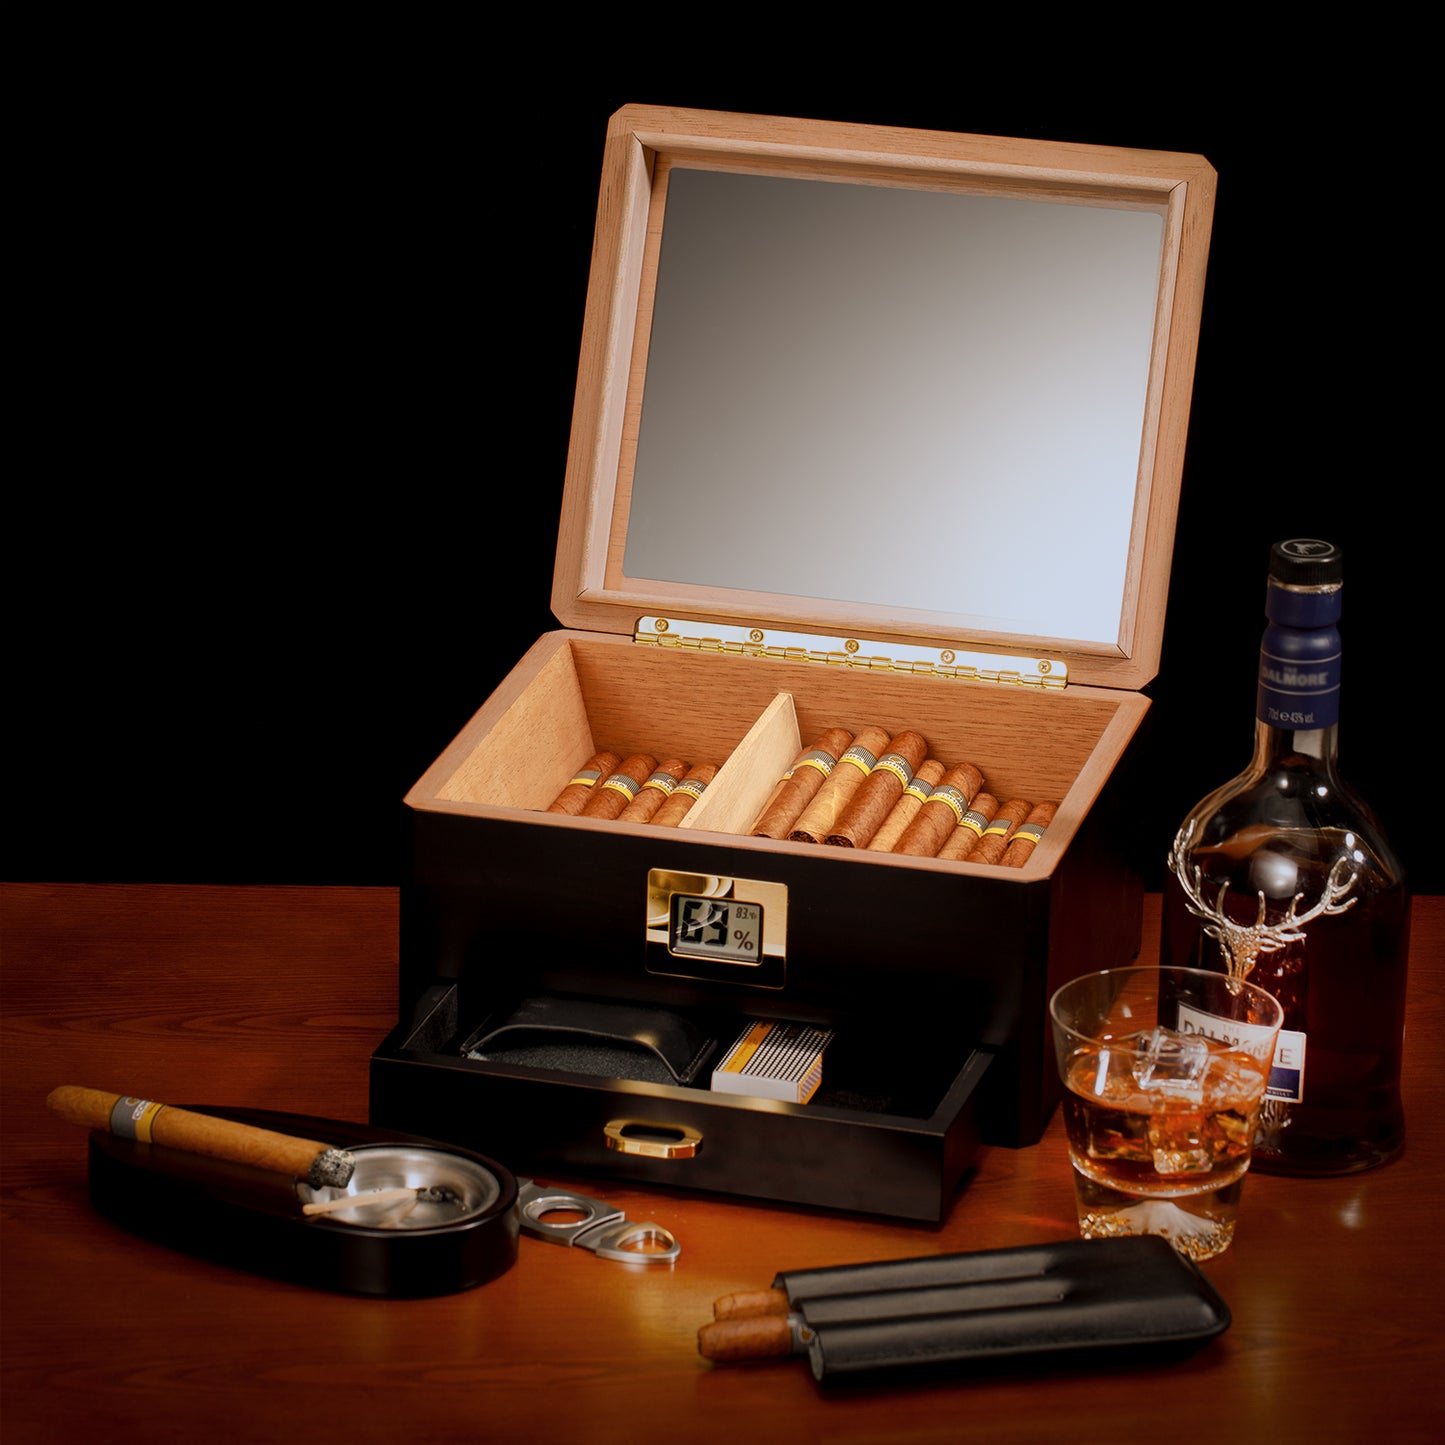 Enstatit A5043 Cigar Humidor with Drawer